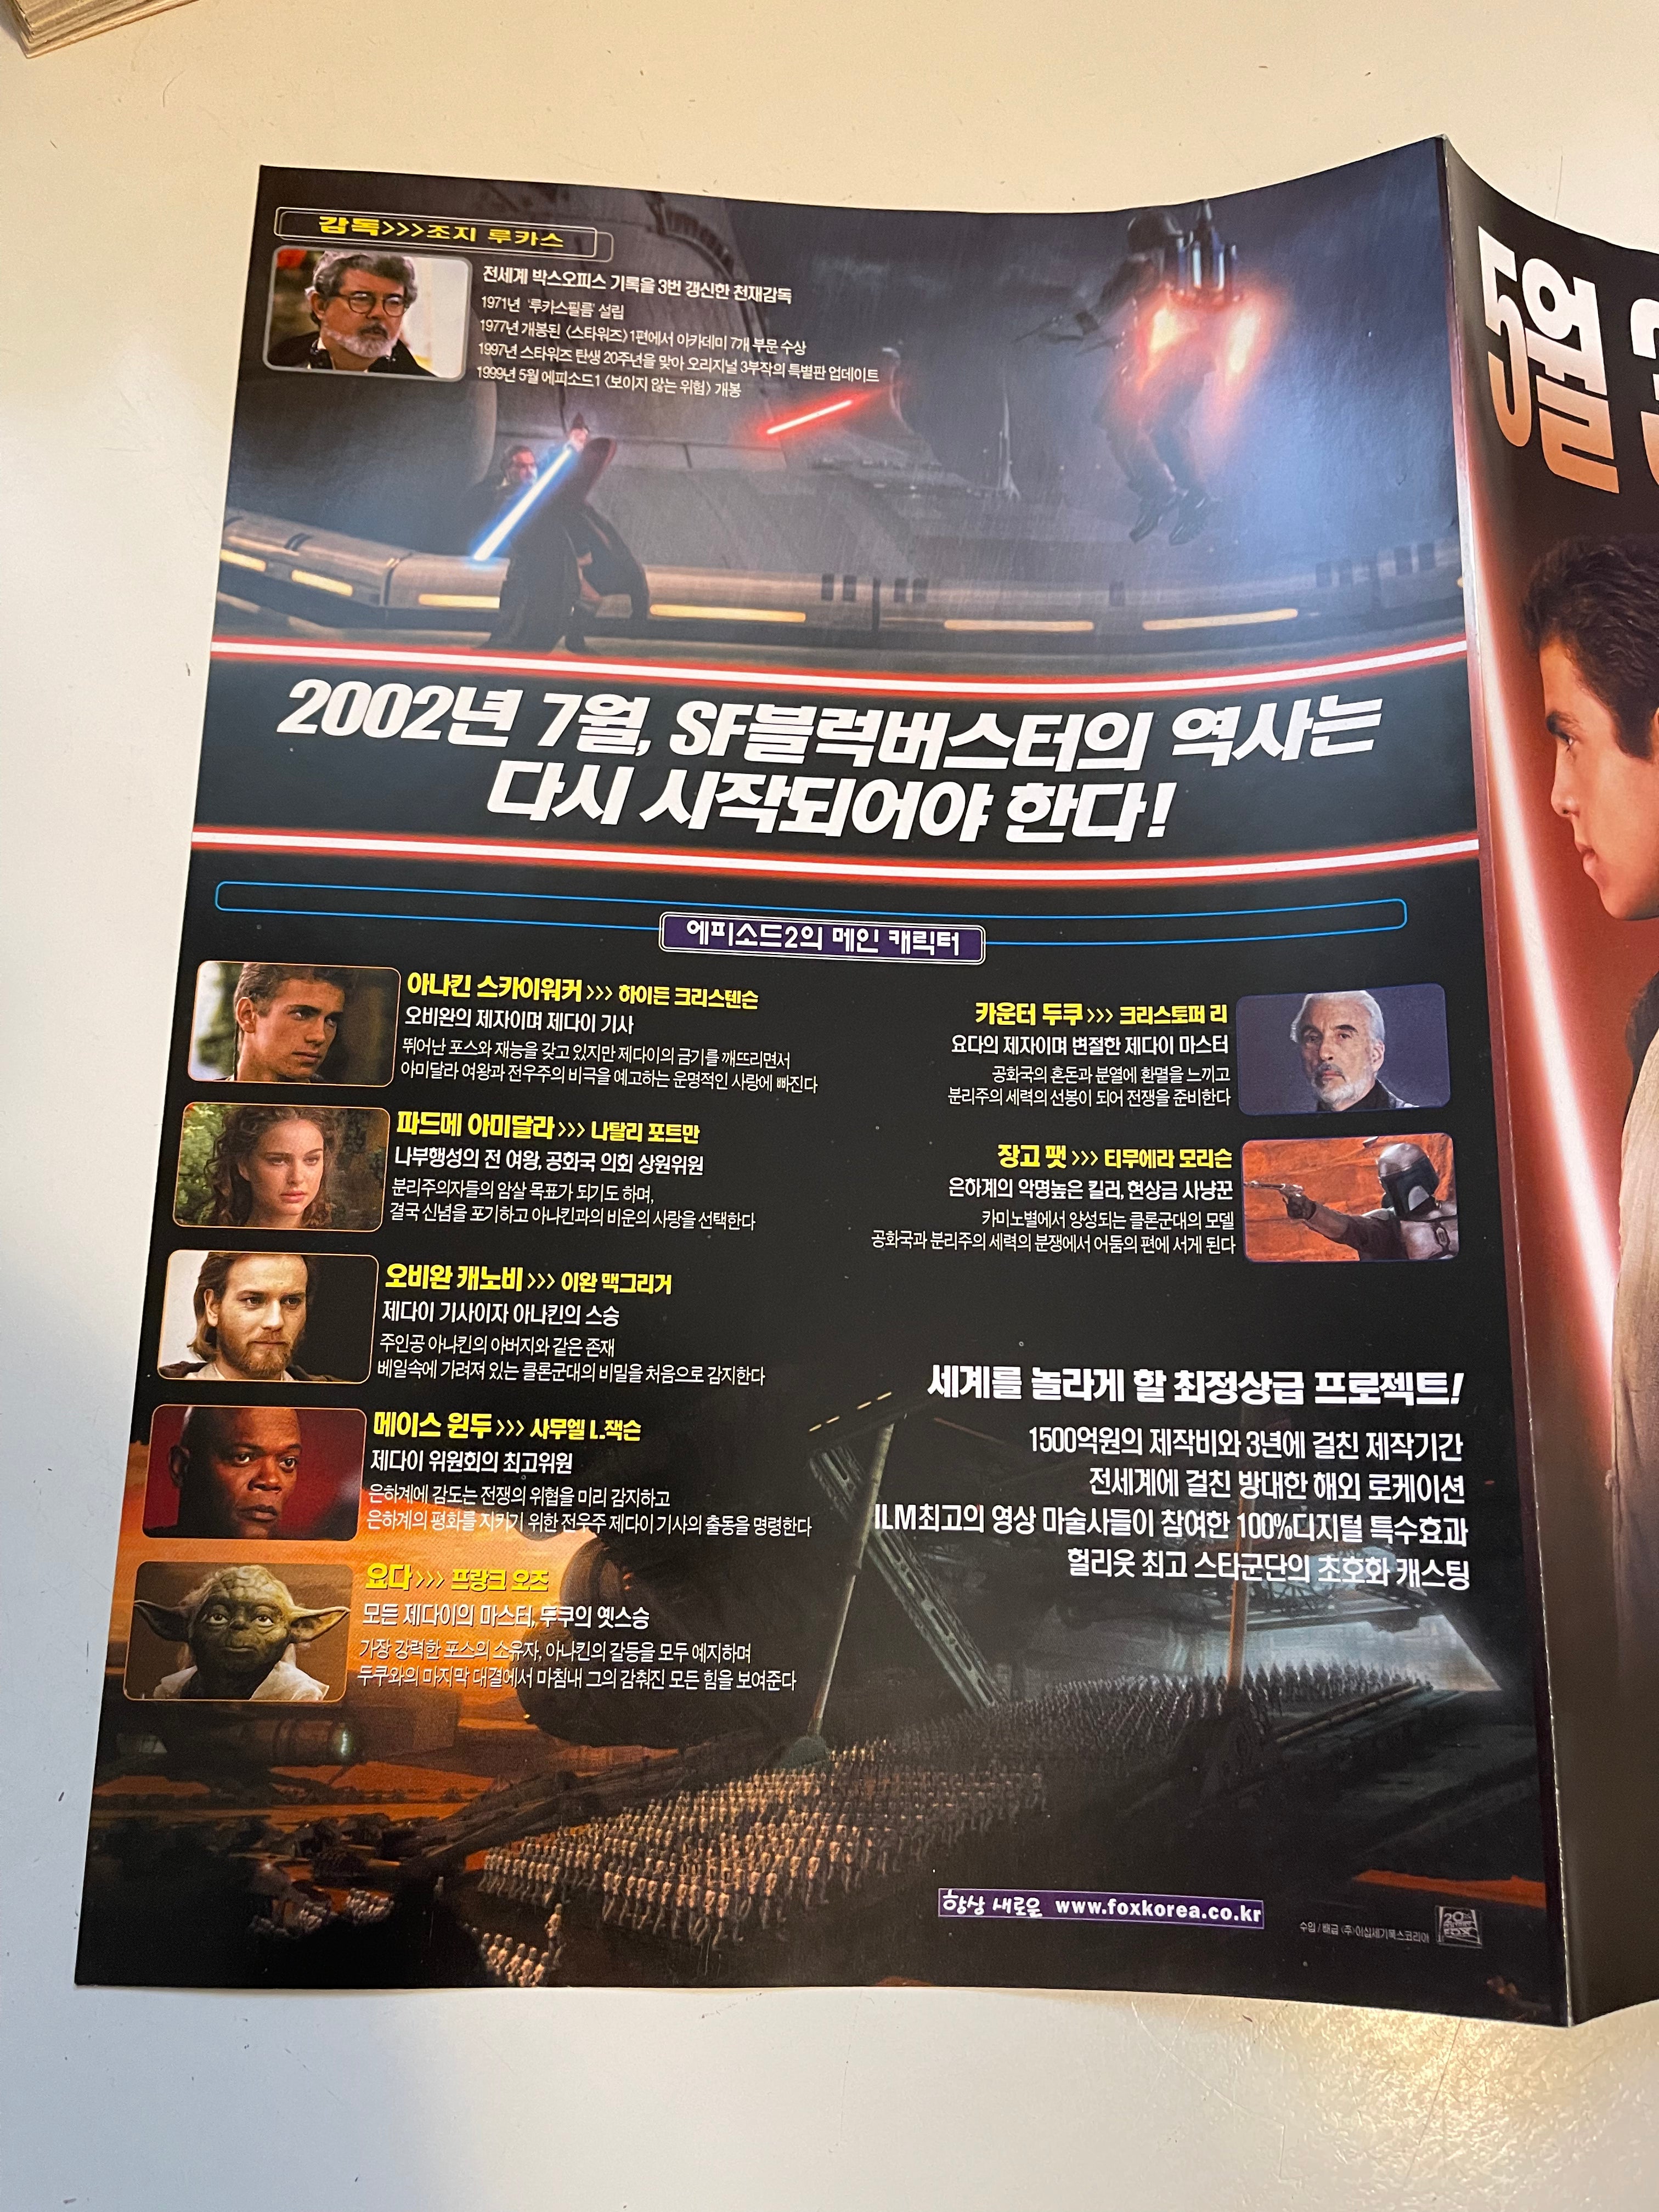 Star Wars Eps. 2 Attack of the clones rare Korean ad brochure 2002